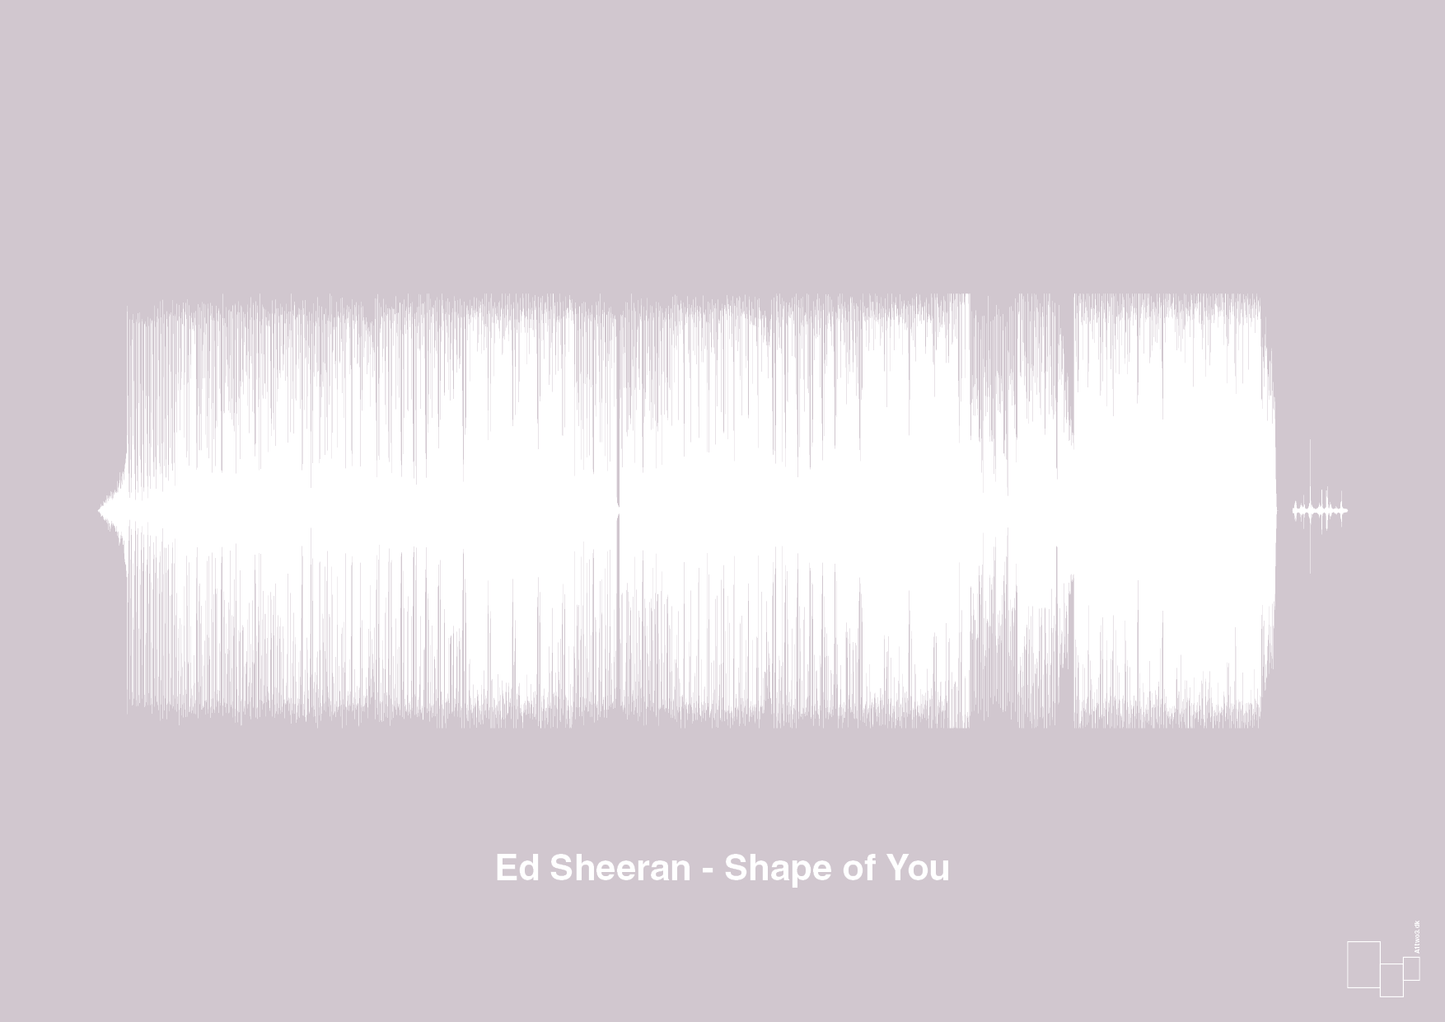 ed sheeran - shape of you - Plakat med Musik i Dusty Lilac